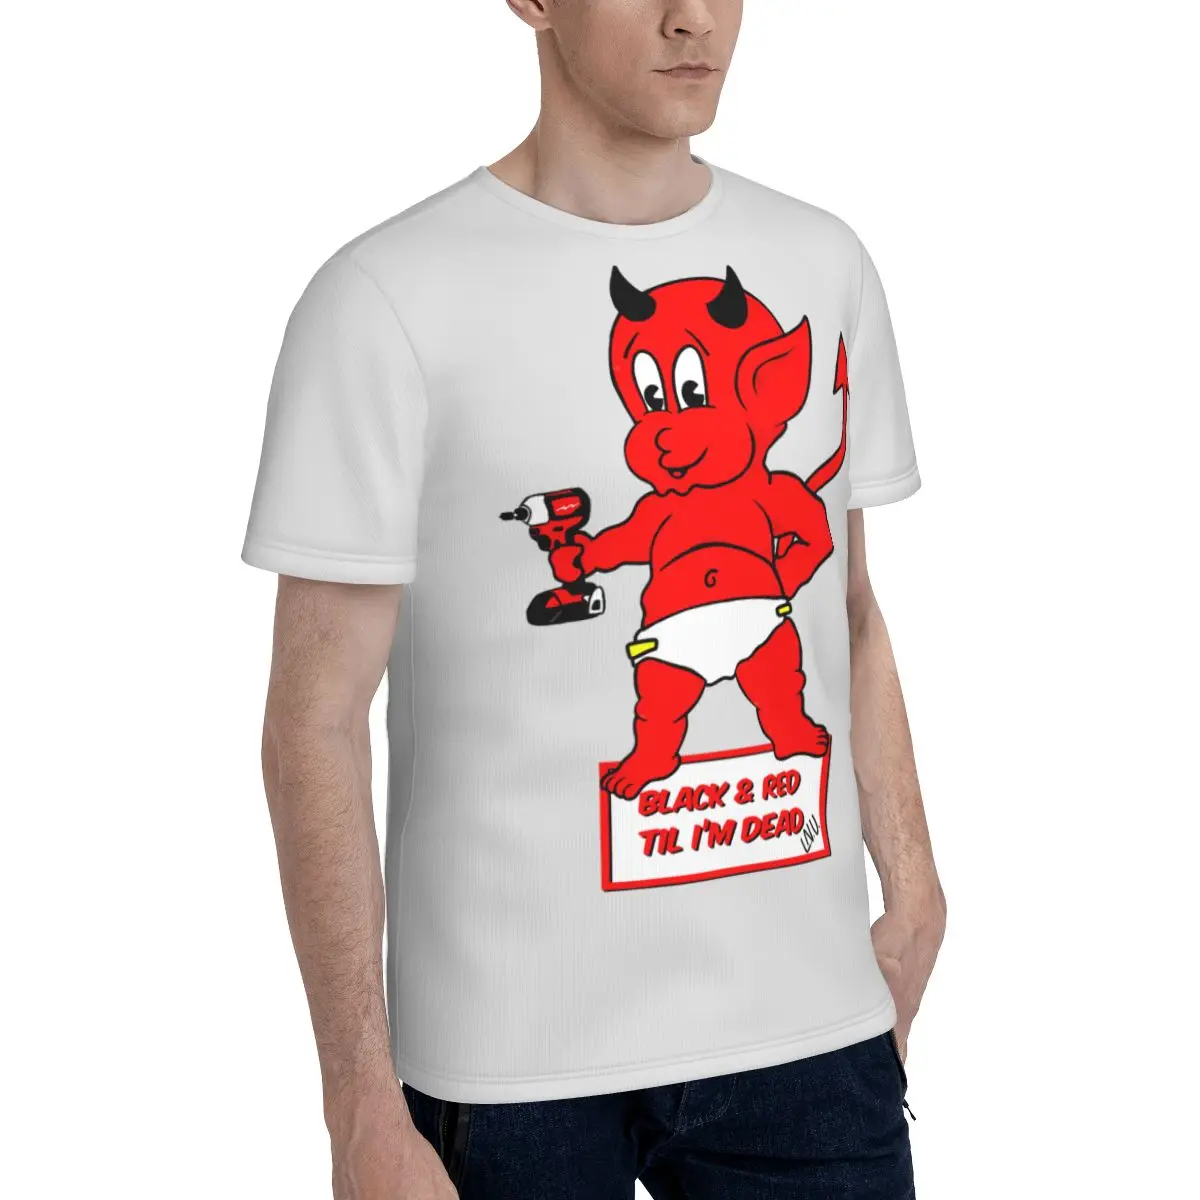 Promo Baseball Milwaukees Tools Devil T-shirt Graphic Men's T Shirt Print Funny Geek R258 Tees Tops European Size